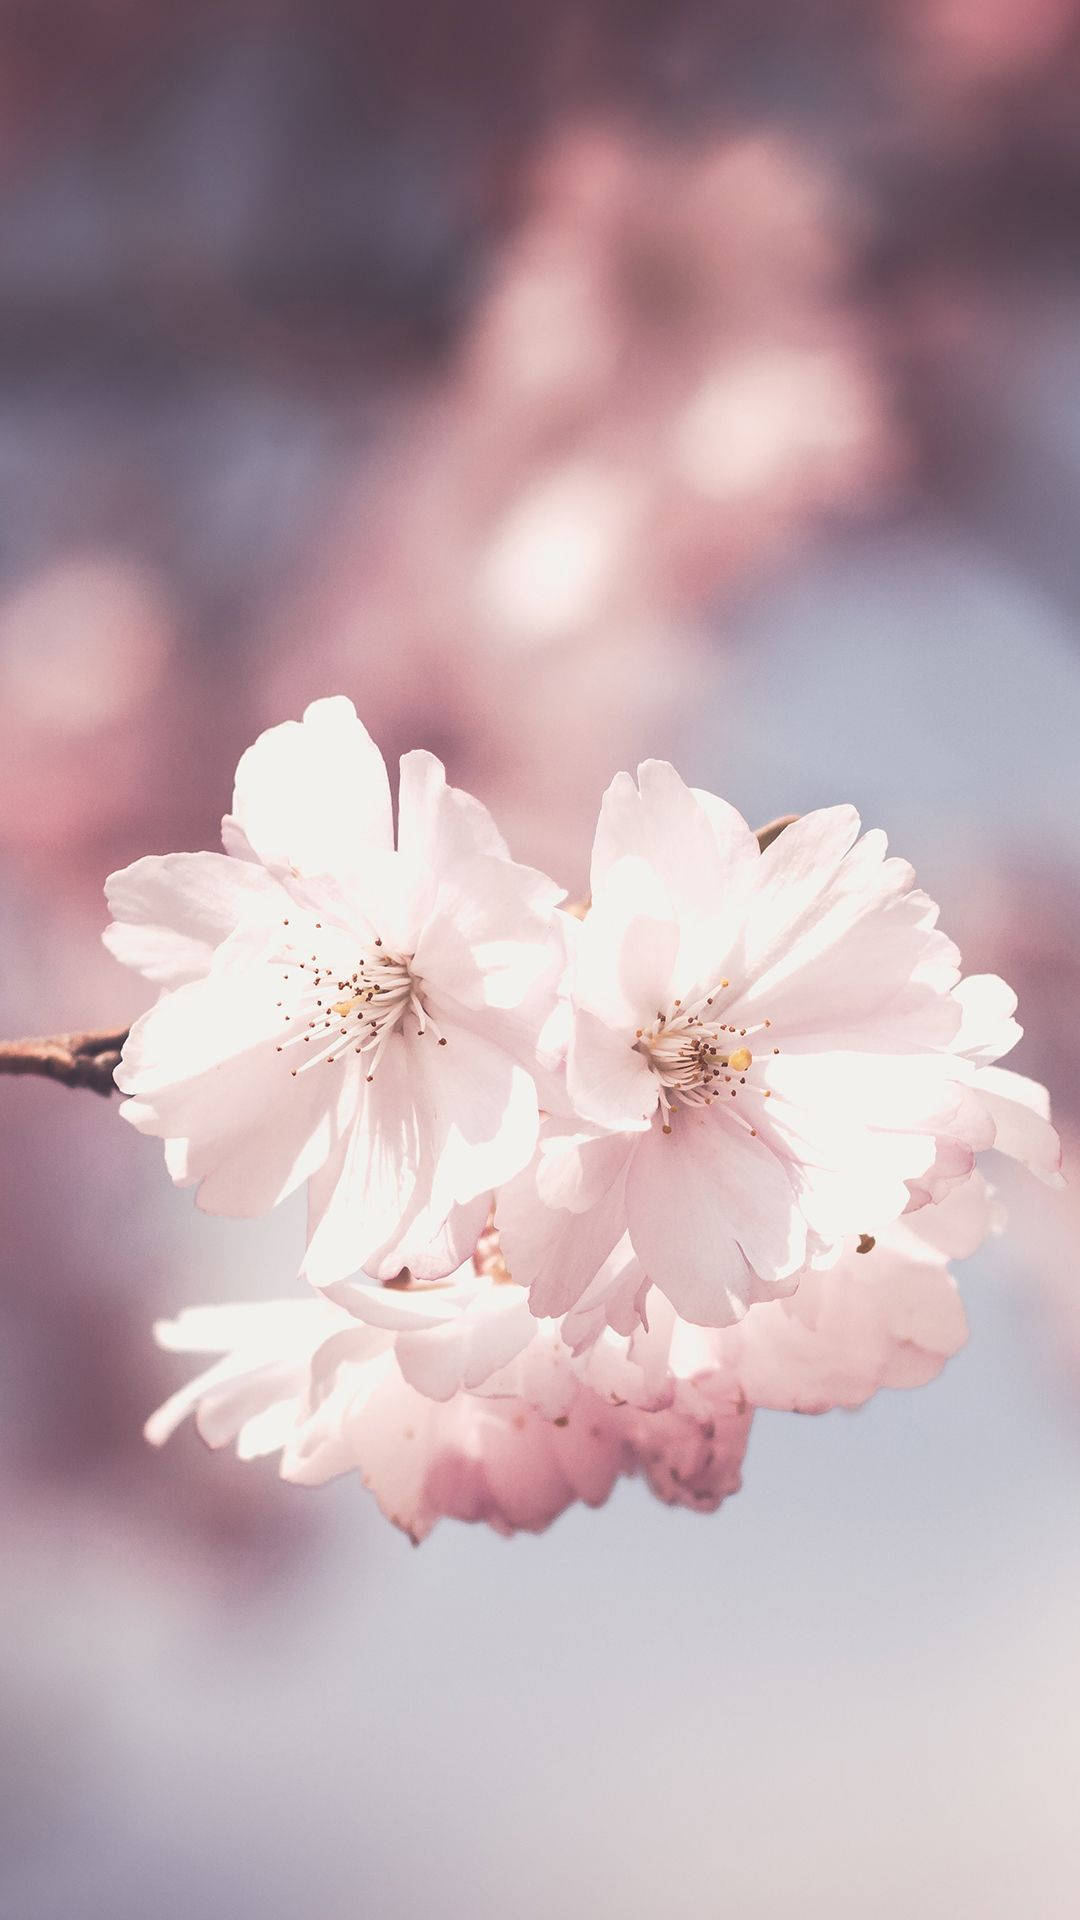 Cute Pink Flower Blurred Background